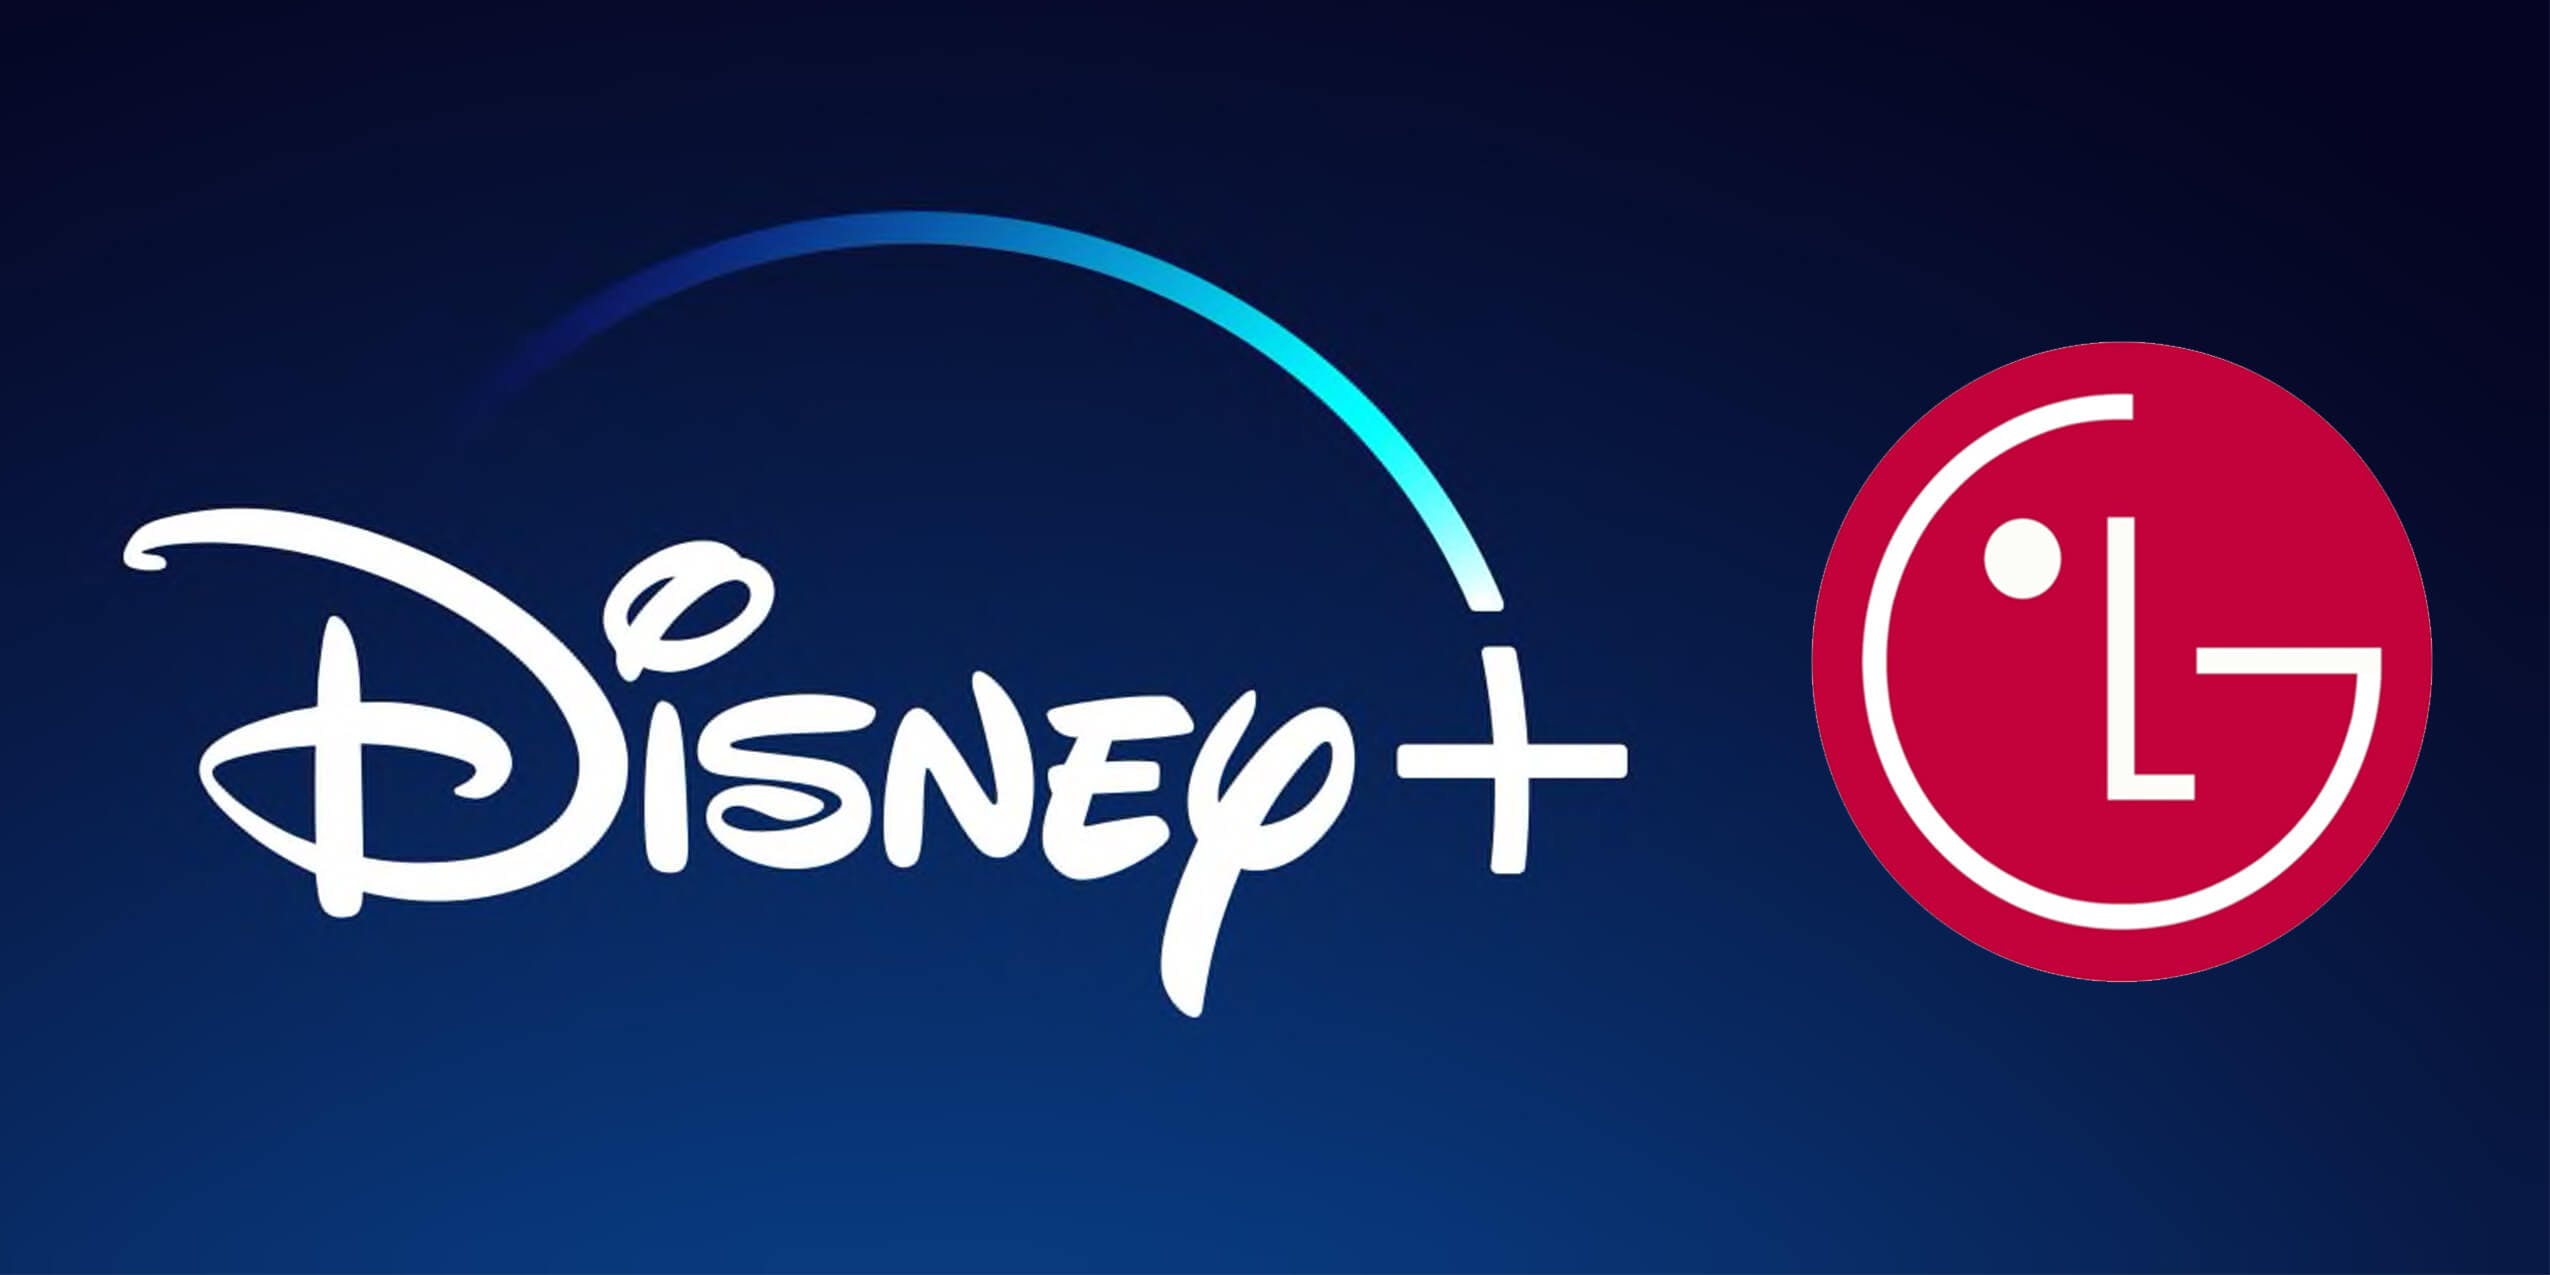 How To Install Disney Plus On LG Smart TV